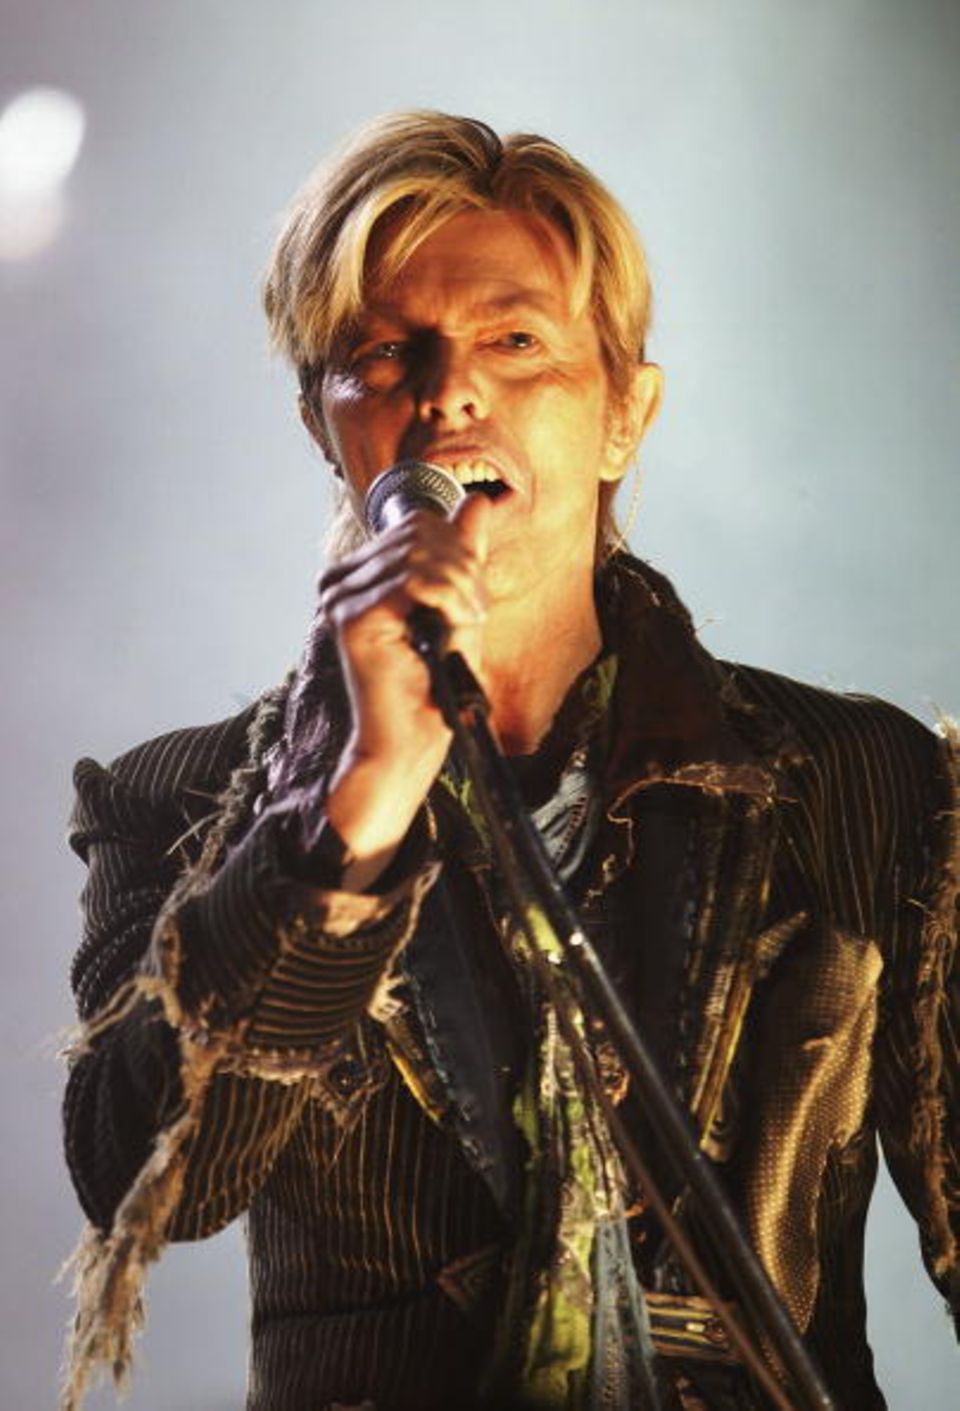 David Bowie tot gestorben Lebenswerk Galerie